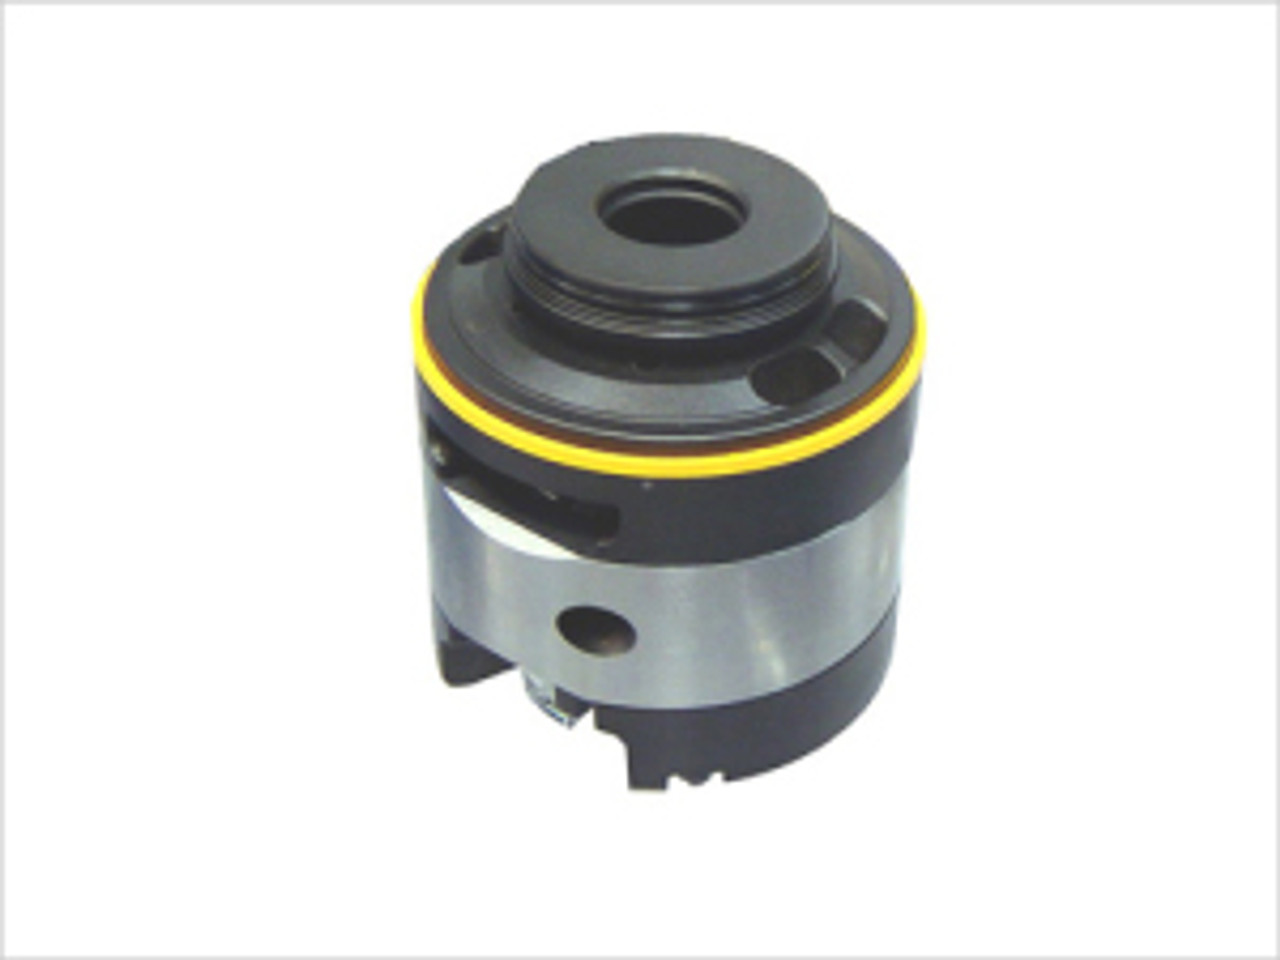 421239 Vickers Hydraulic Vane Pump Replacement Cartridge Kit